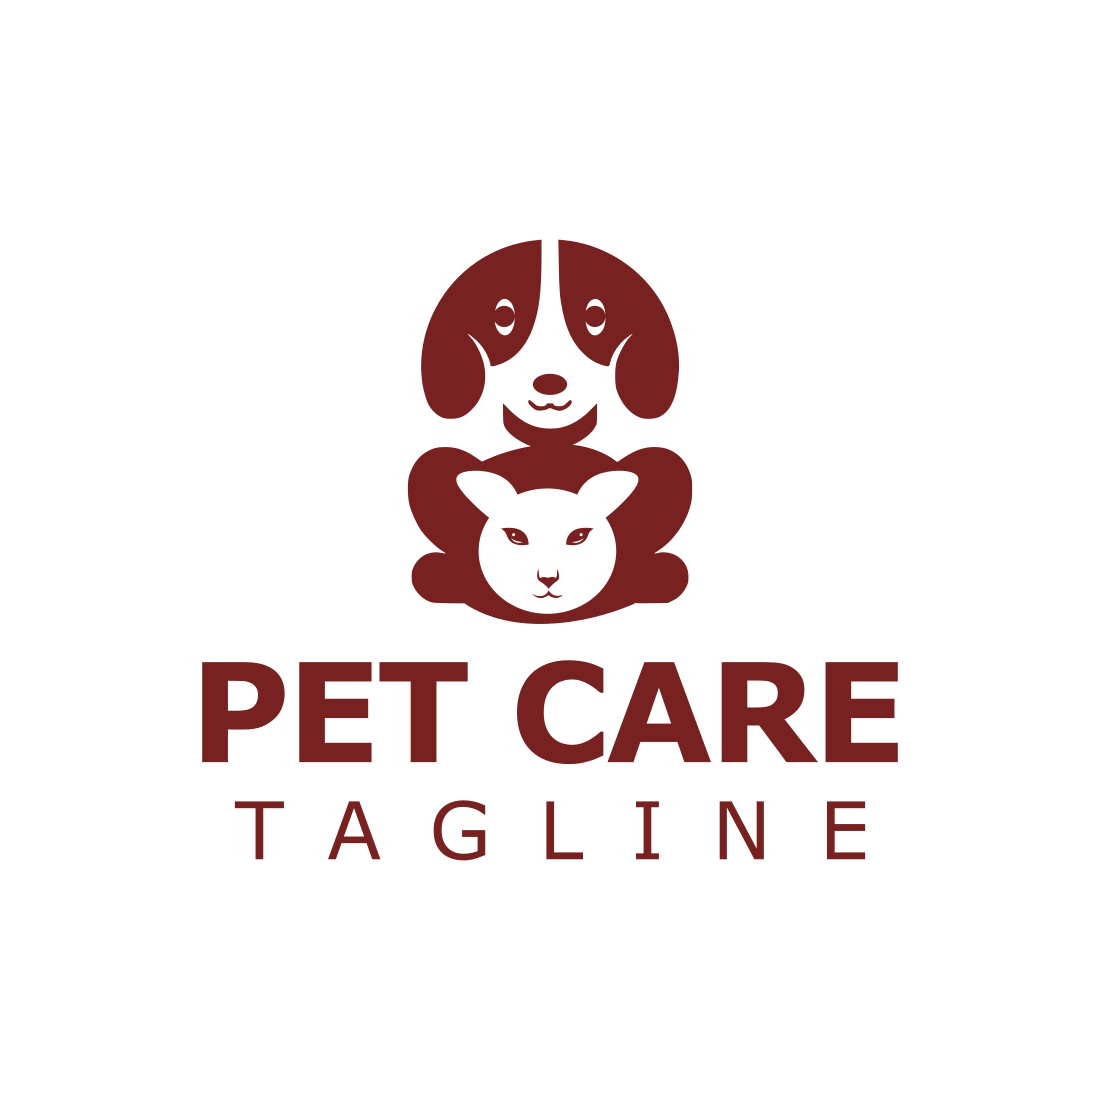 Pet Care Custom Logo Design Template cover image.